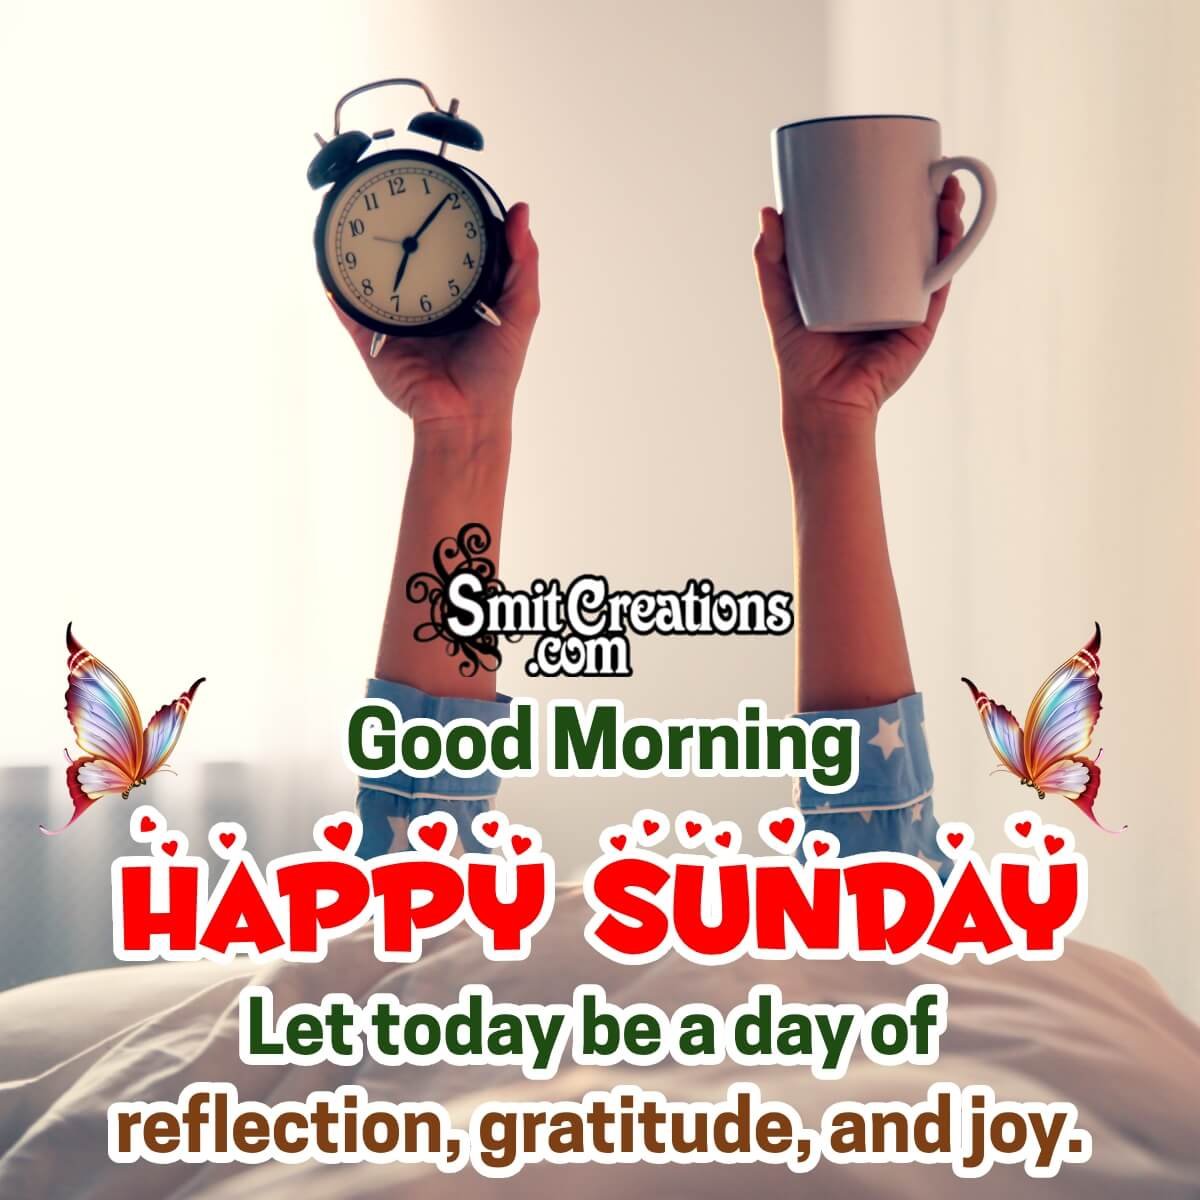 Good Morning Happy Sunday Message